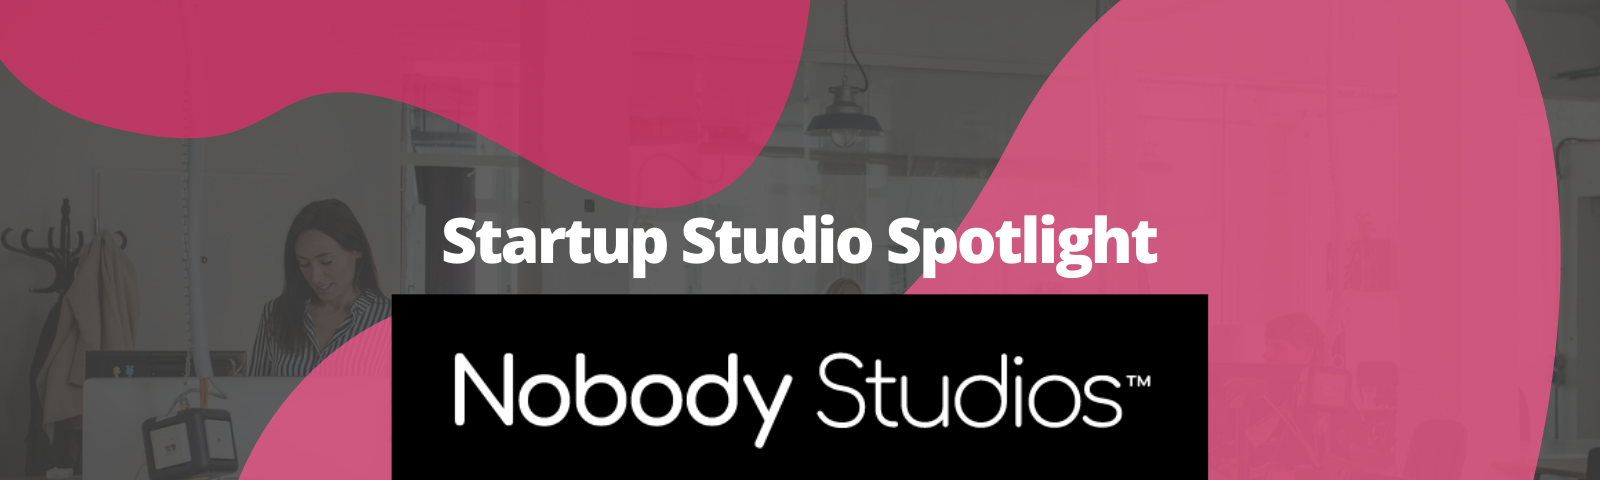 Startup Studio Spotlight: Nobody Studios